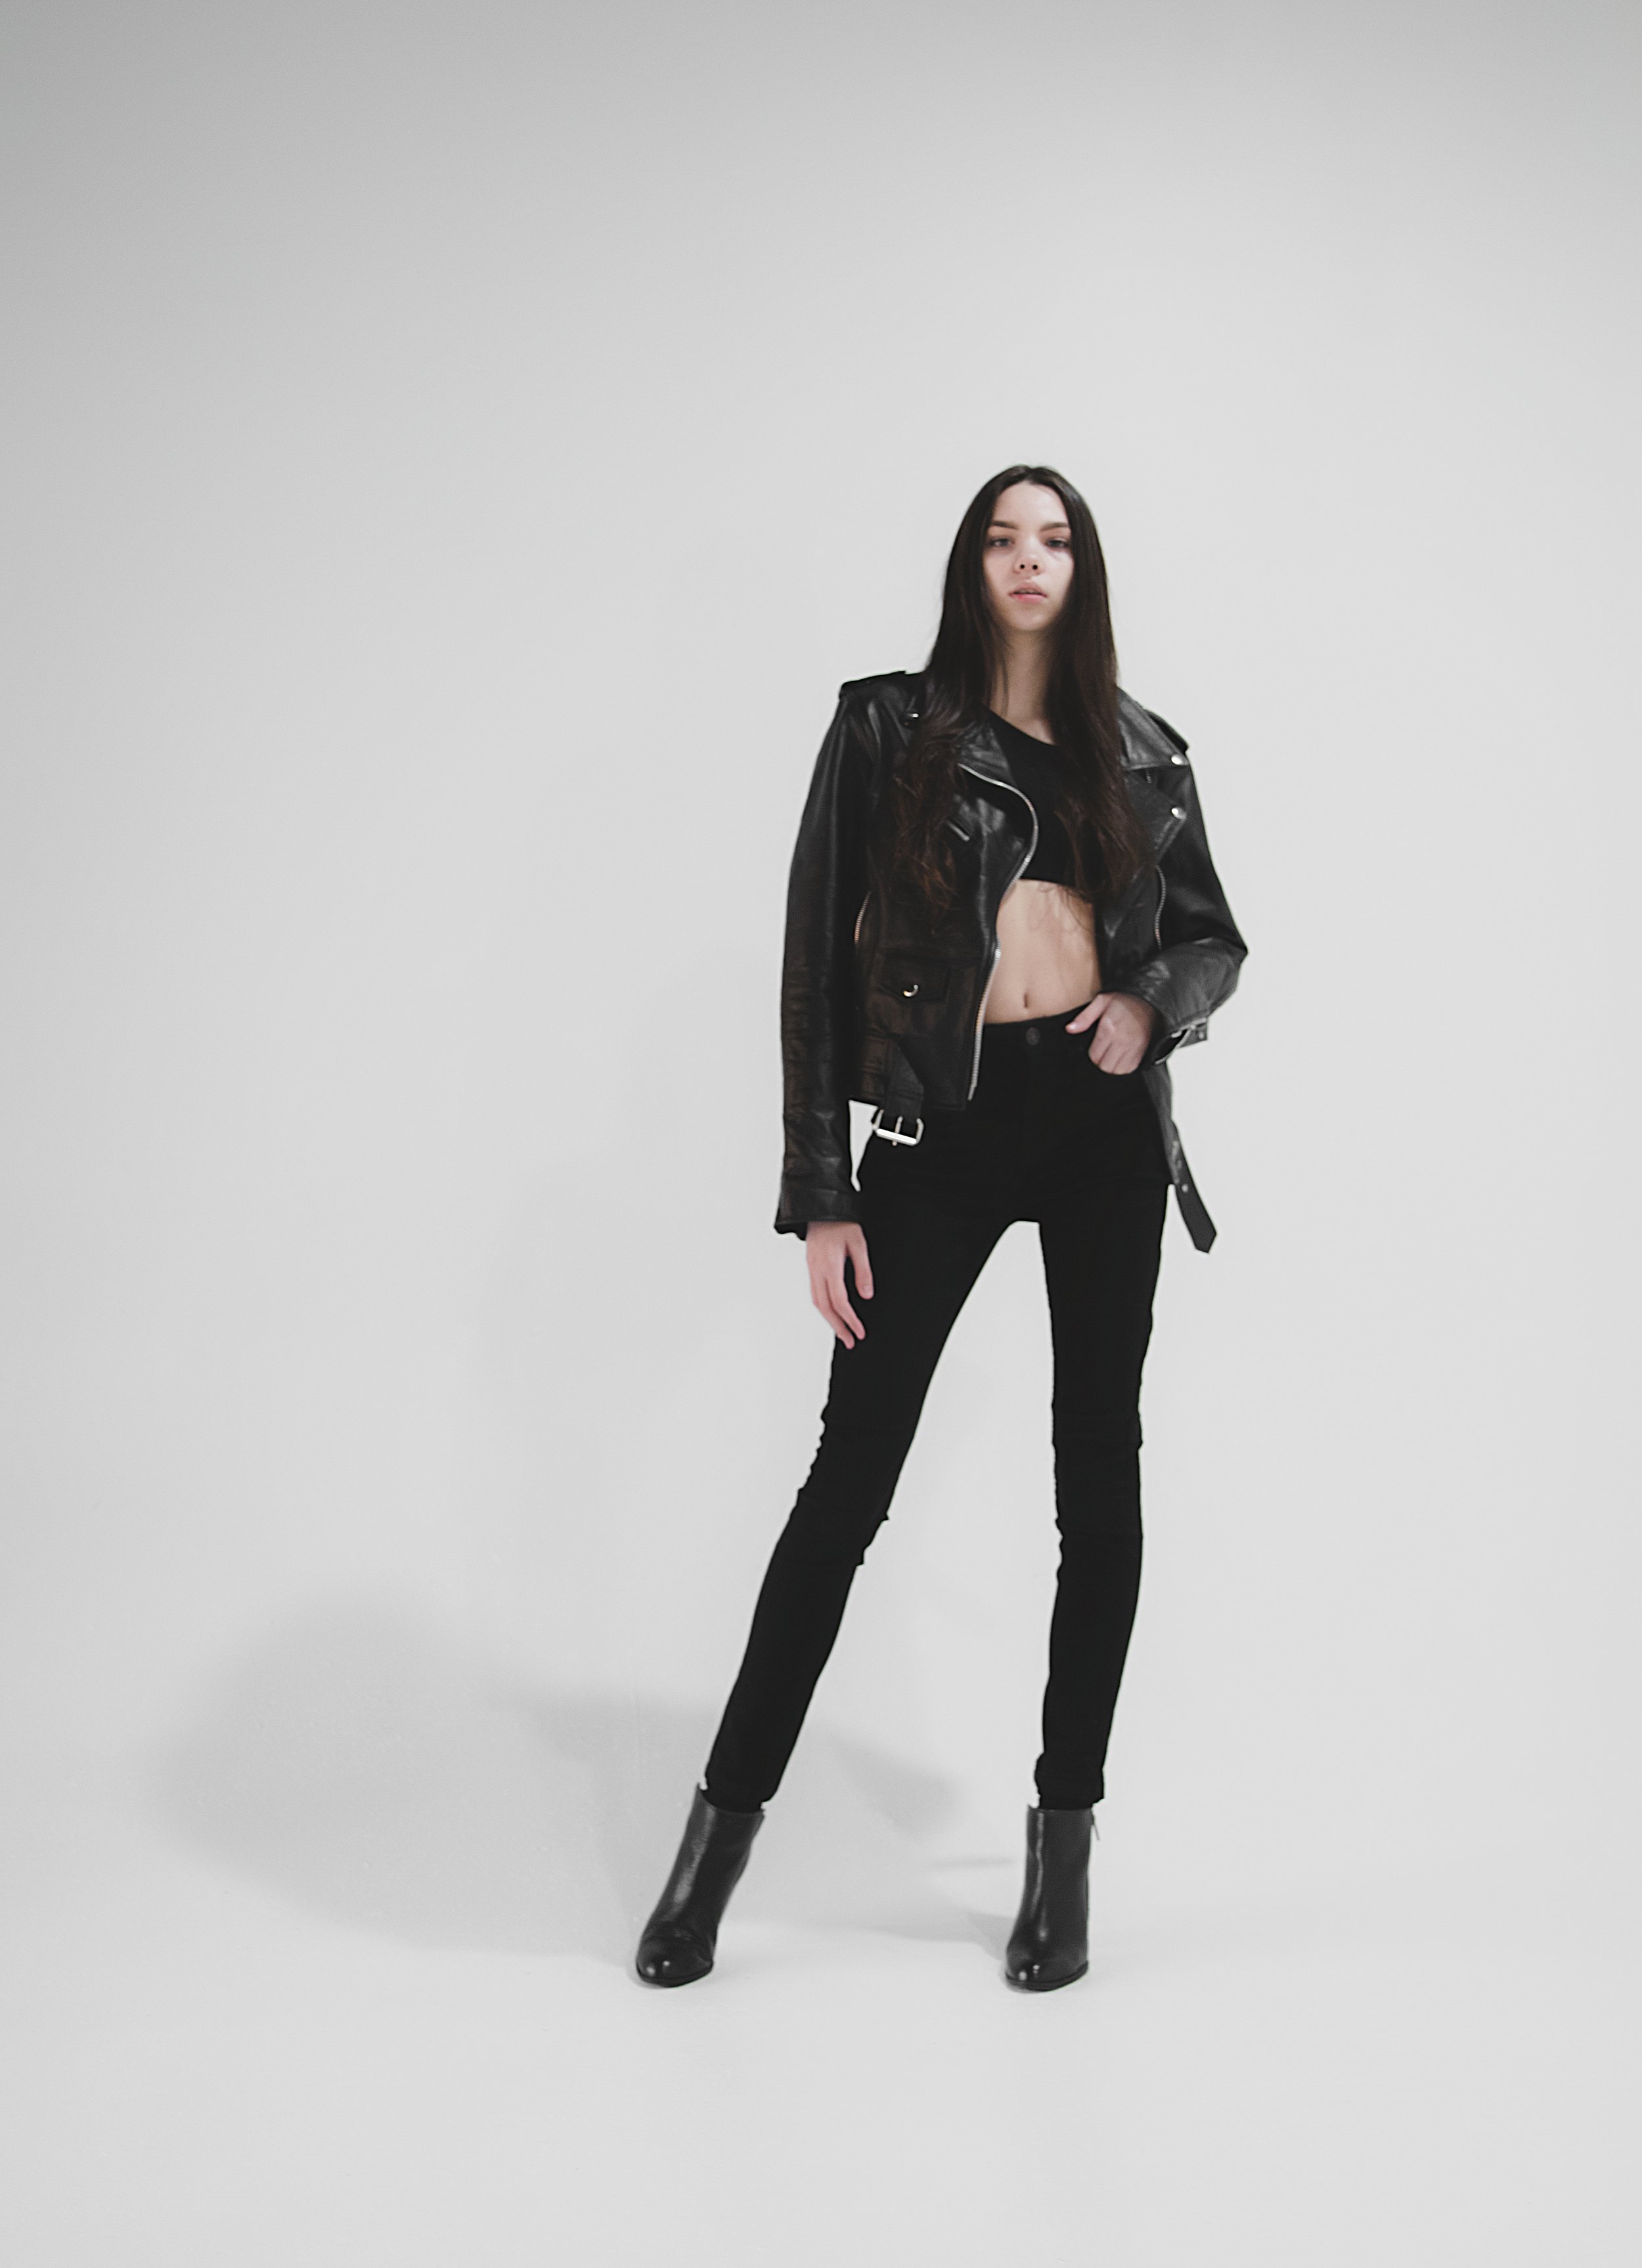  Model: Olivia Giallanza  Agency: Latitude Talent   Stylist: Revorish @revorish   Photography: Dario M Rodriguez 